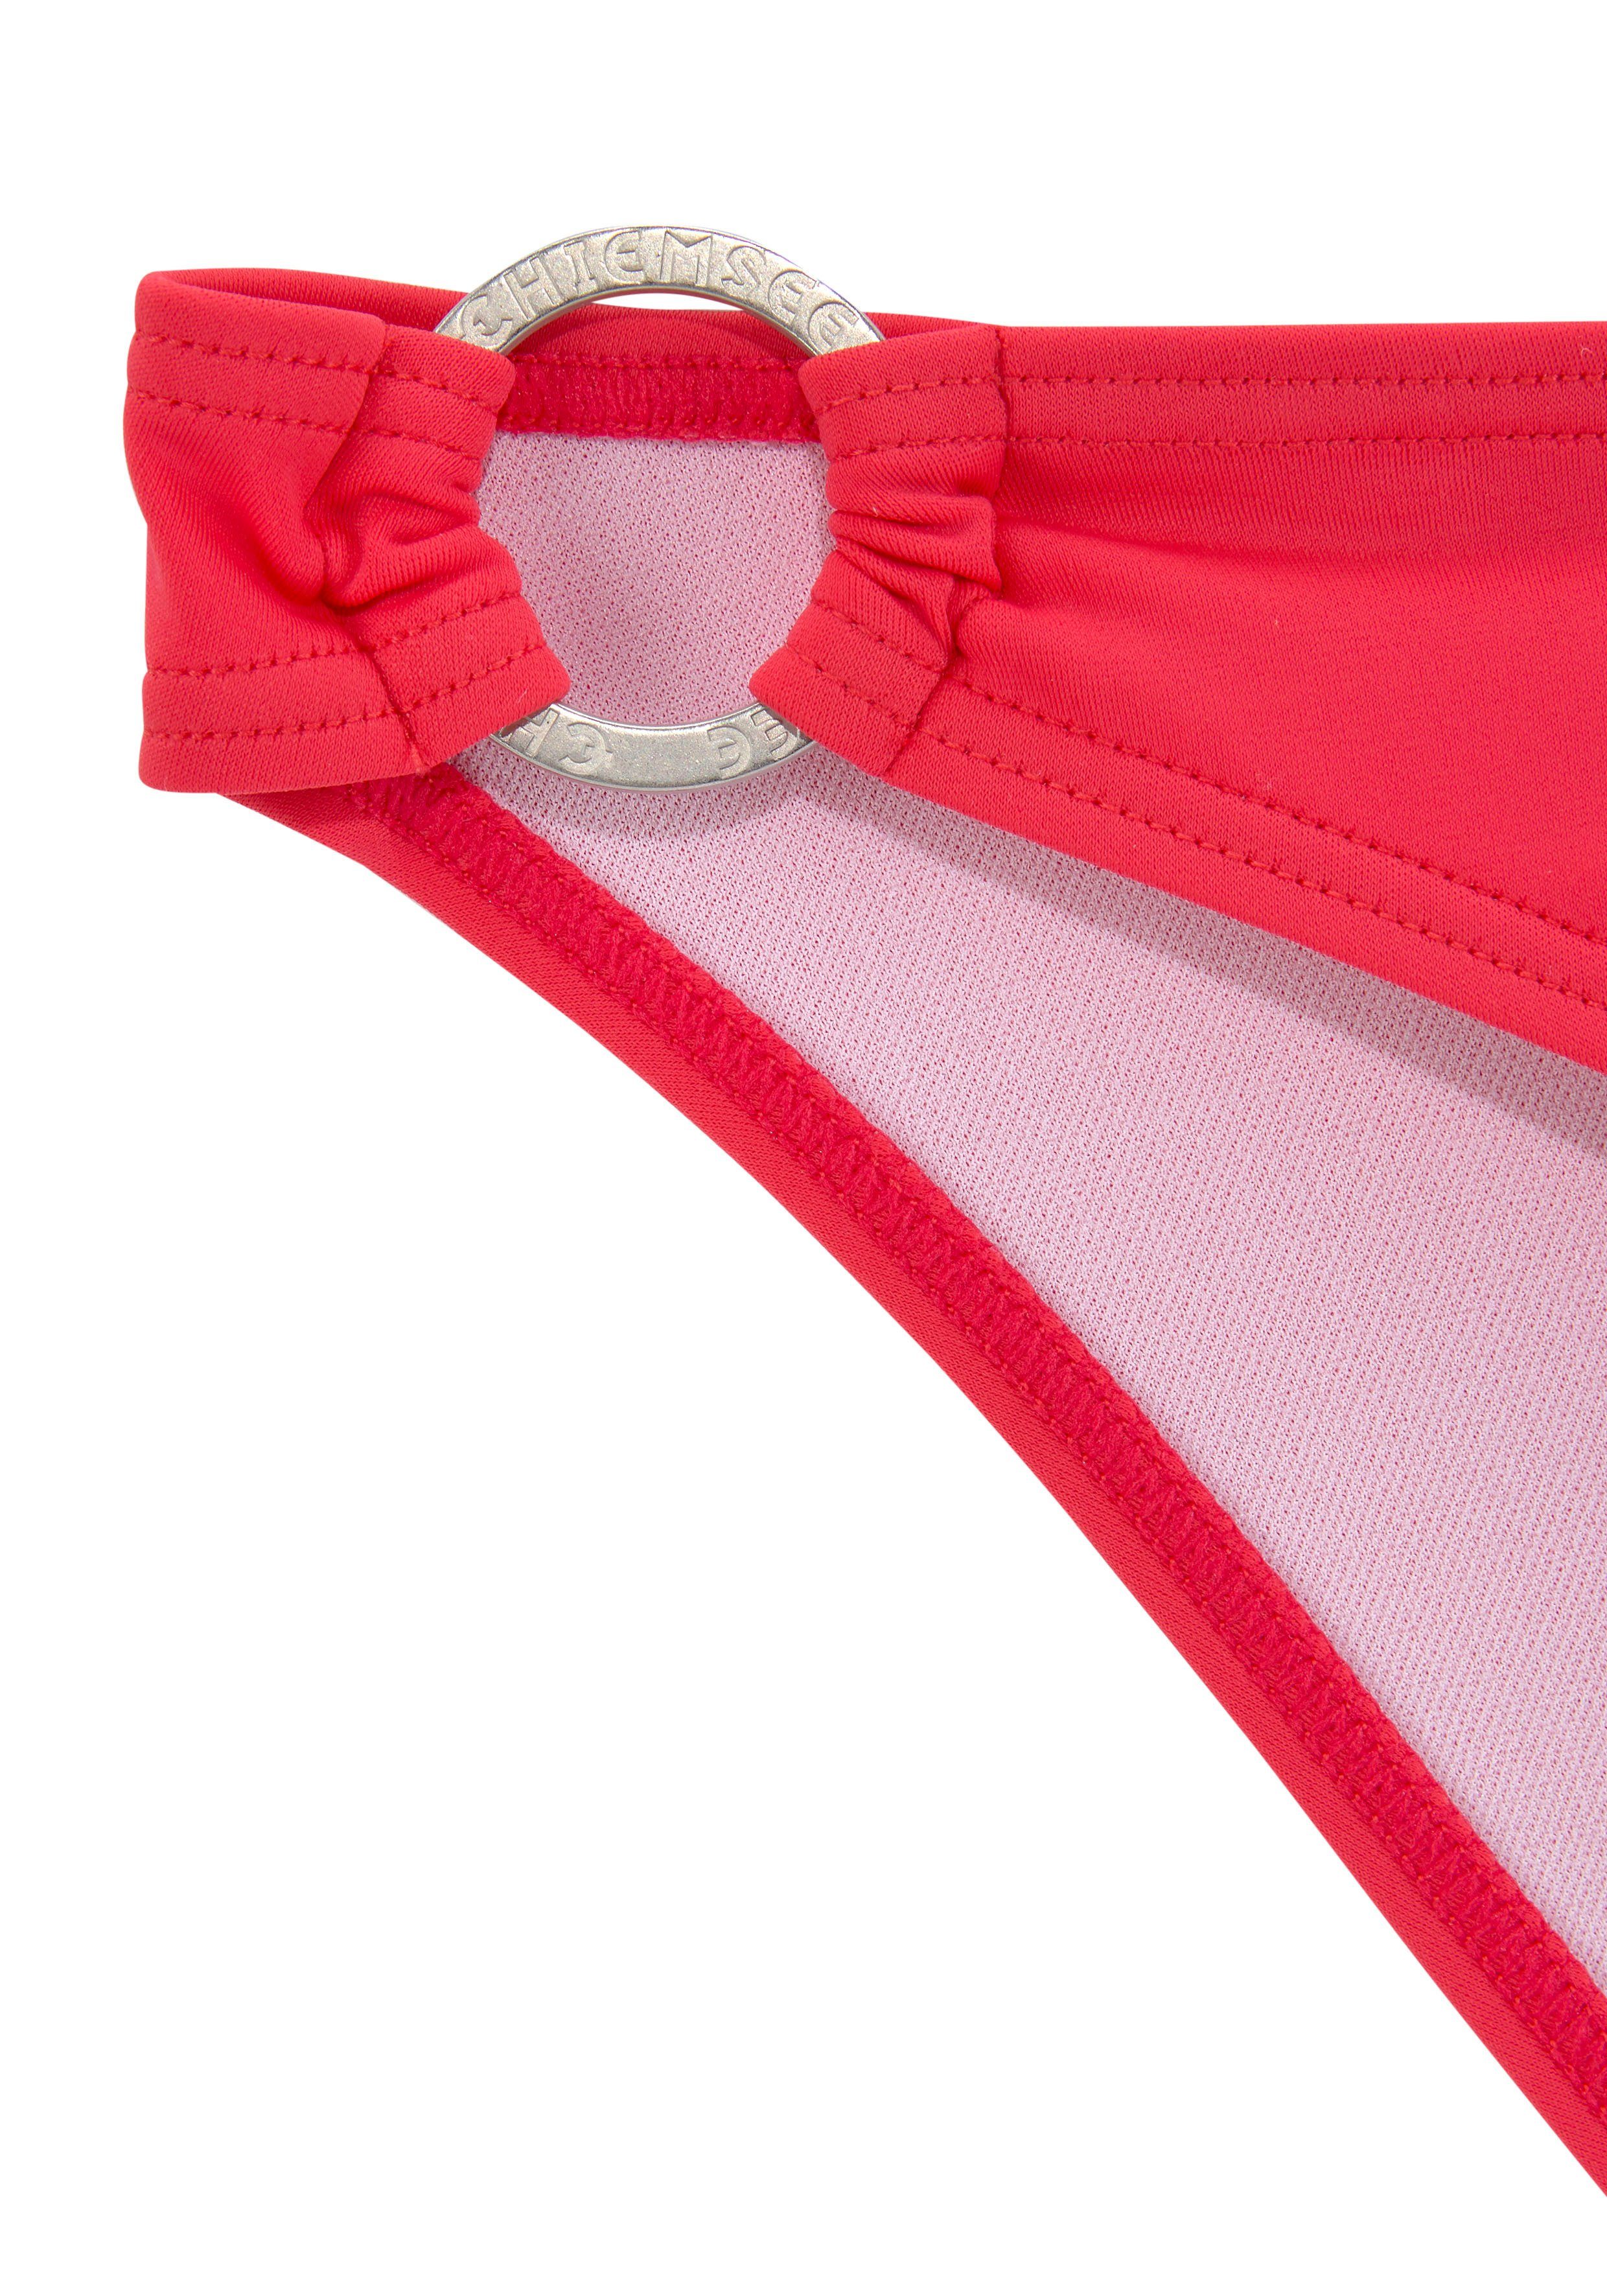 Chiemsee silbernem hummer mit Zierring Bügel-Bikini